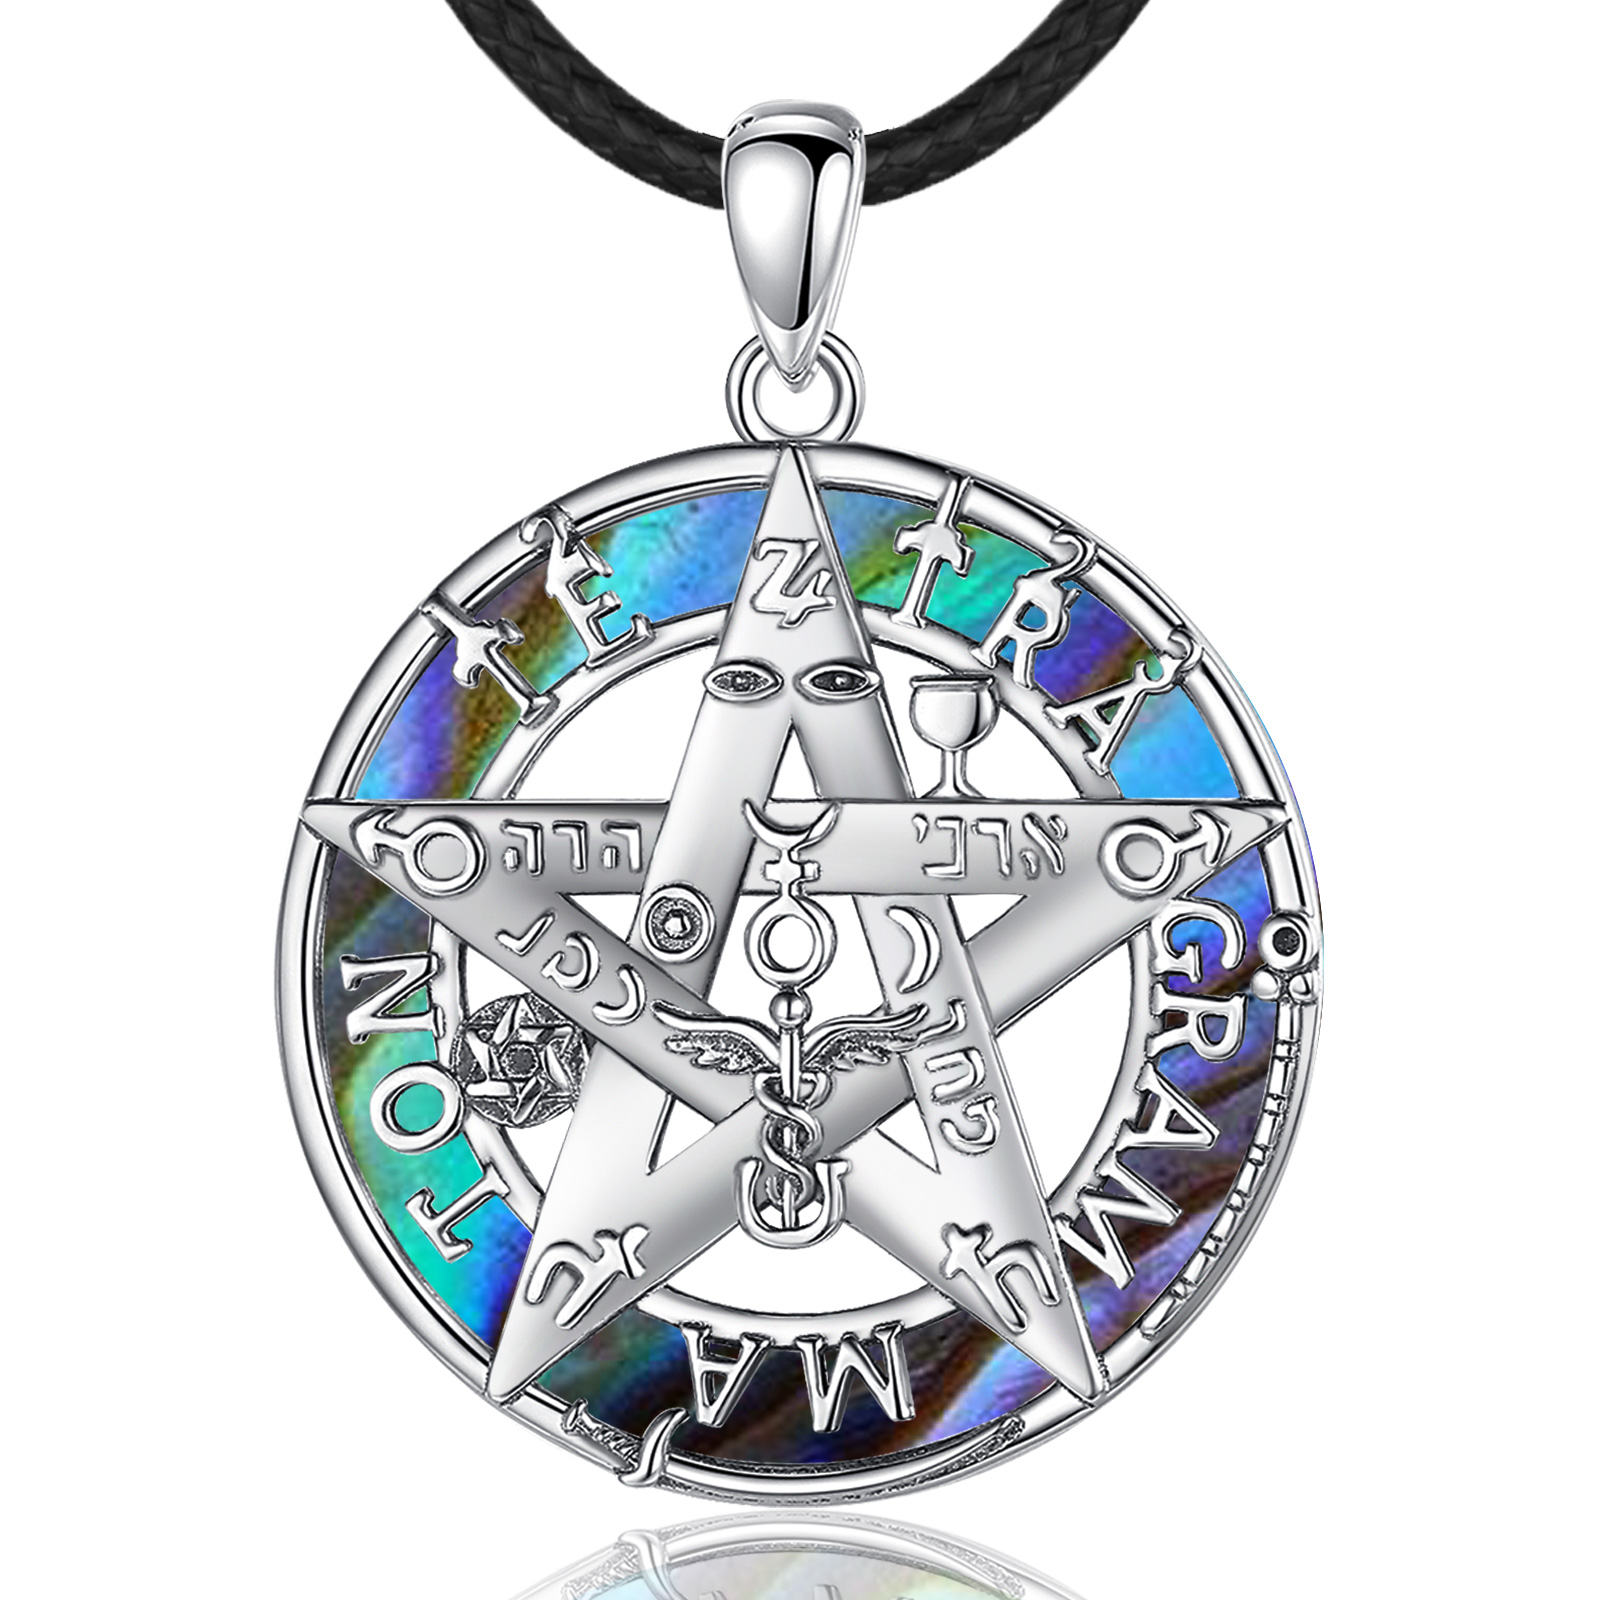 Merryshine 925 sterling silver viking jewelry tetragrammaton pentagram pendant necklace with abalone shell